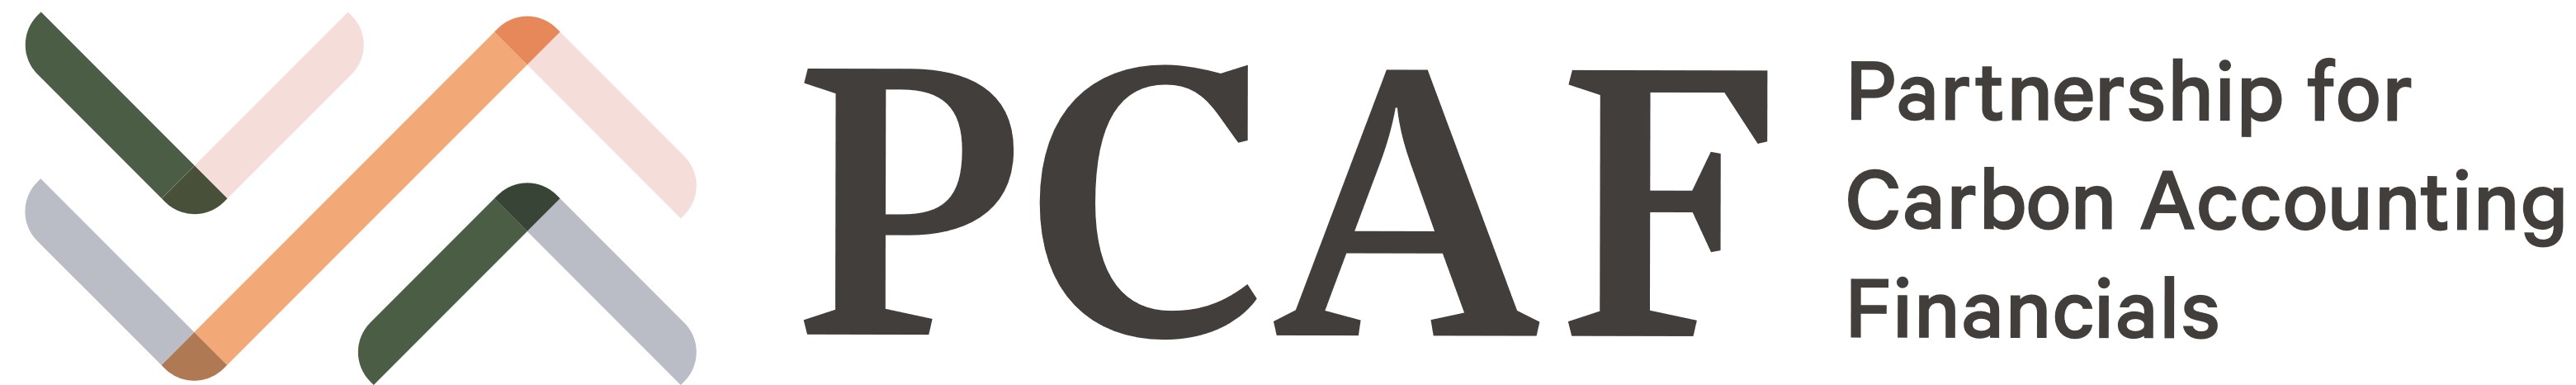 Logo Partnership for Carbon Accounting Financials